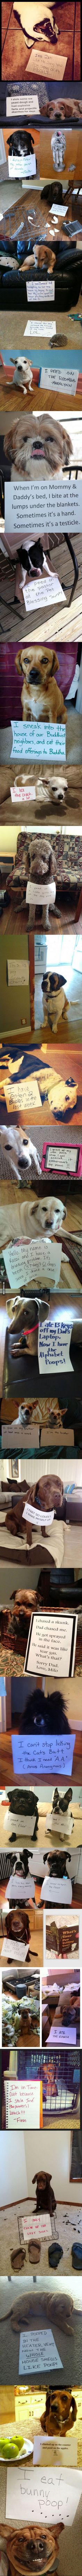 Dog Confessions